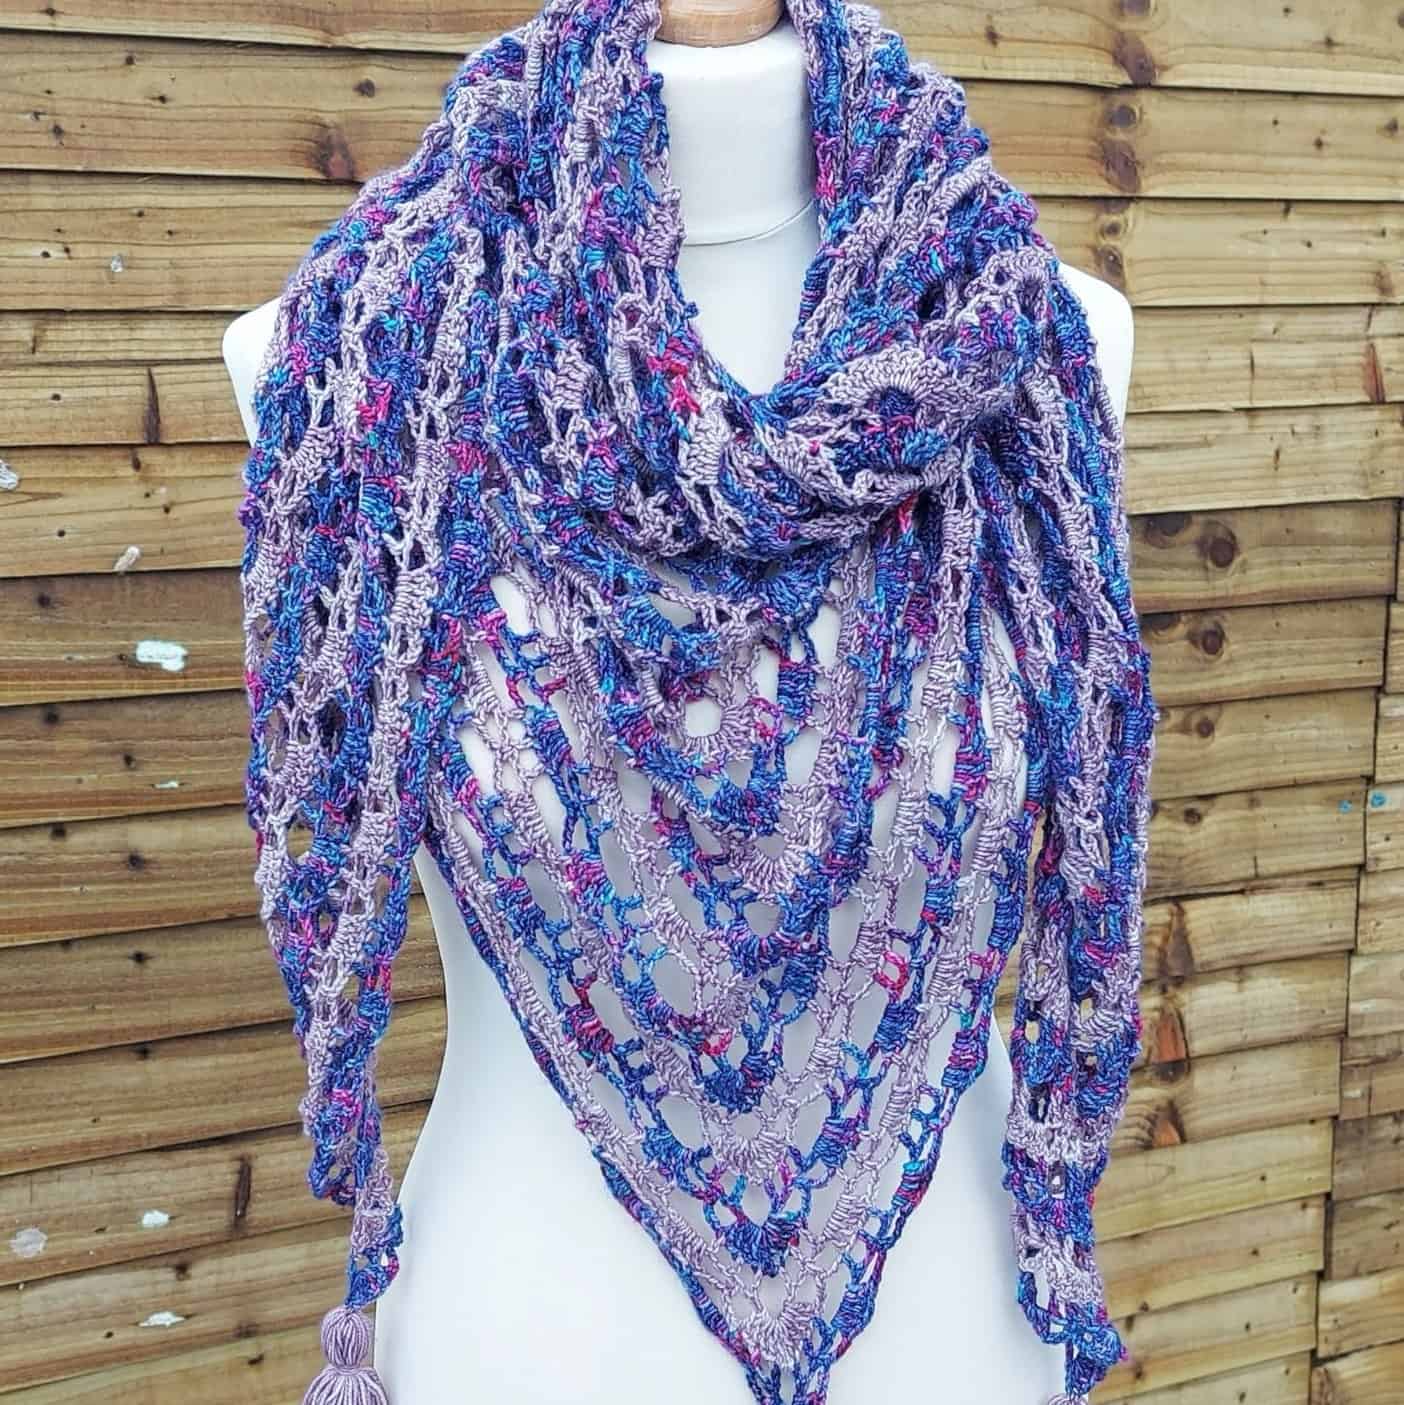 Crochet Lace Shawl Pattern – Faded Blooms